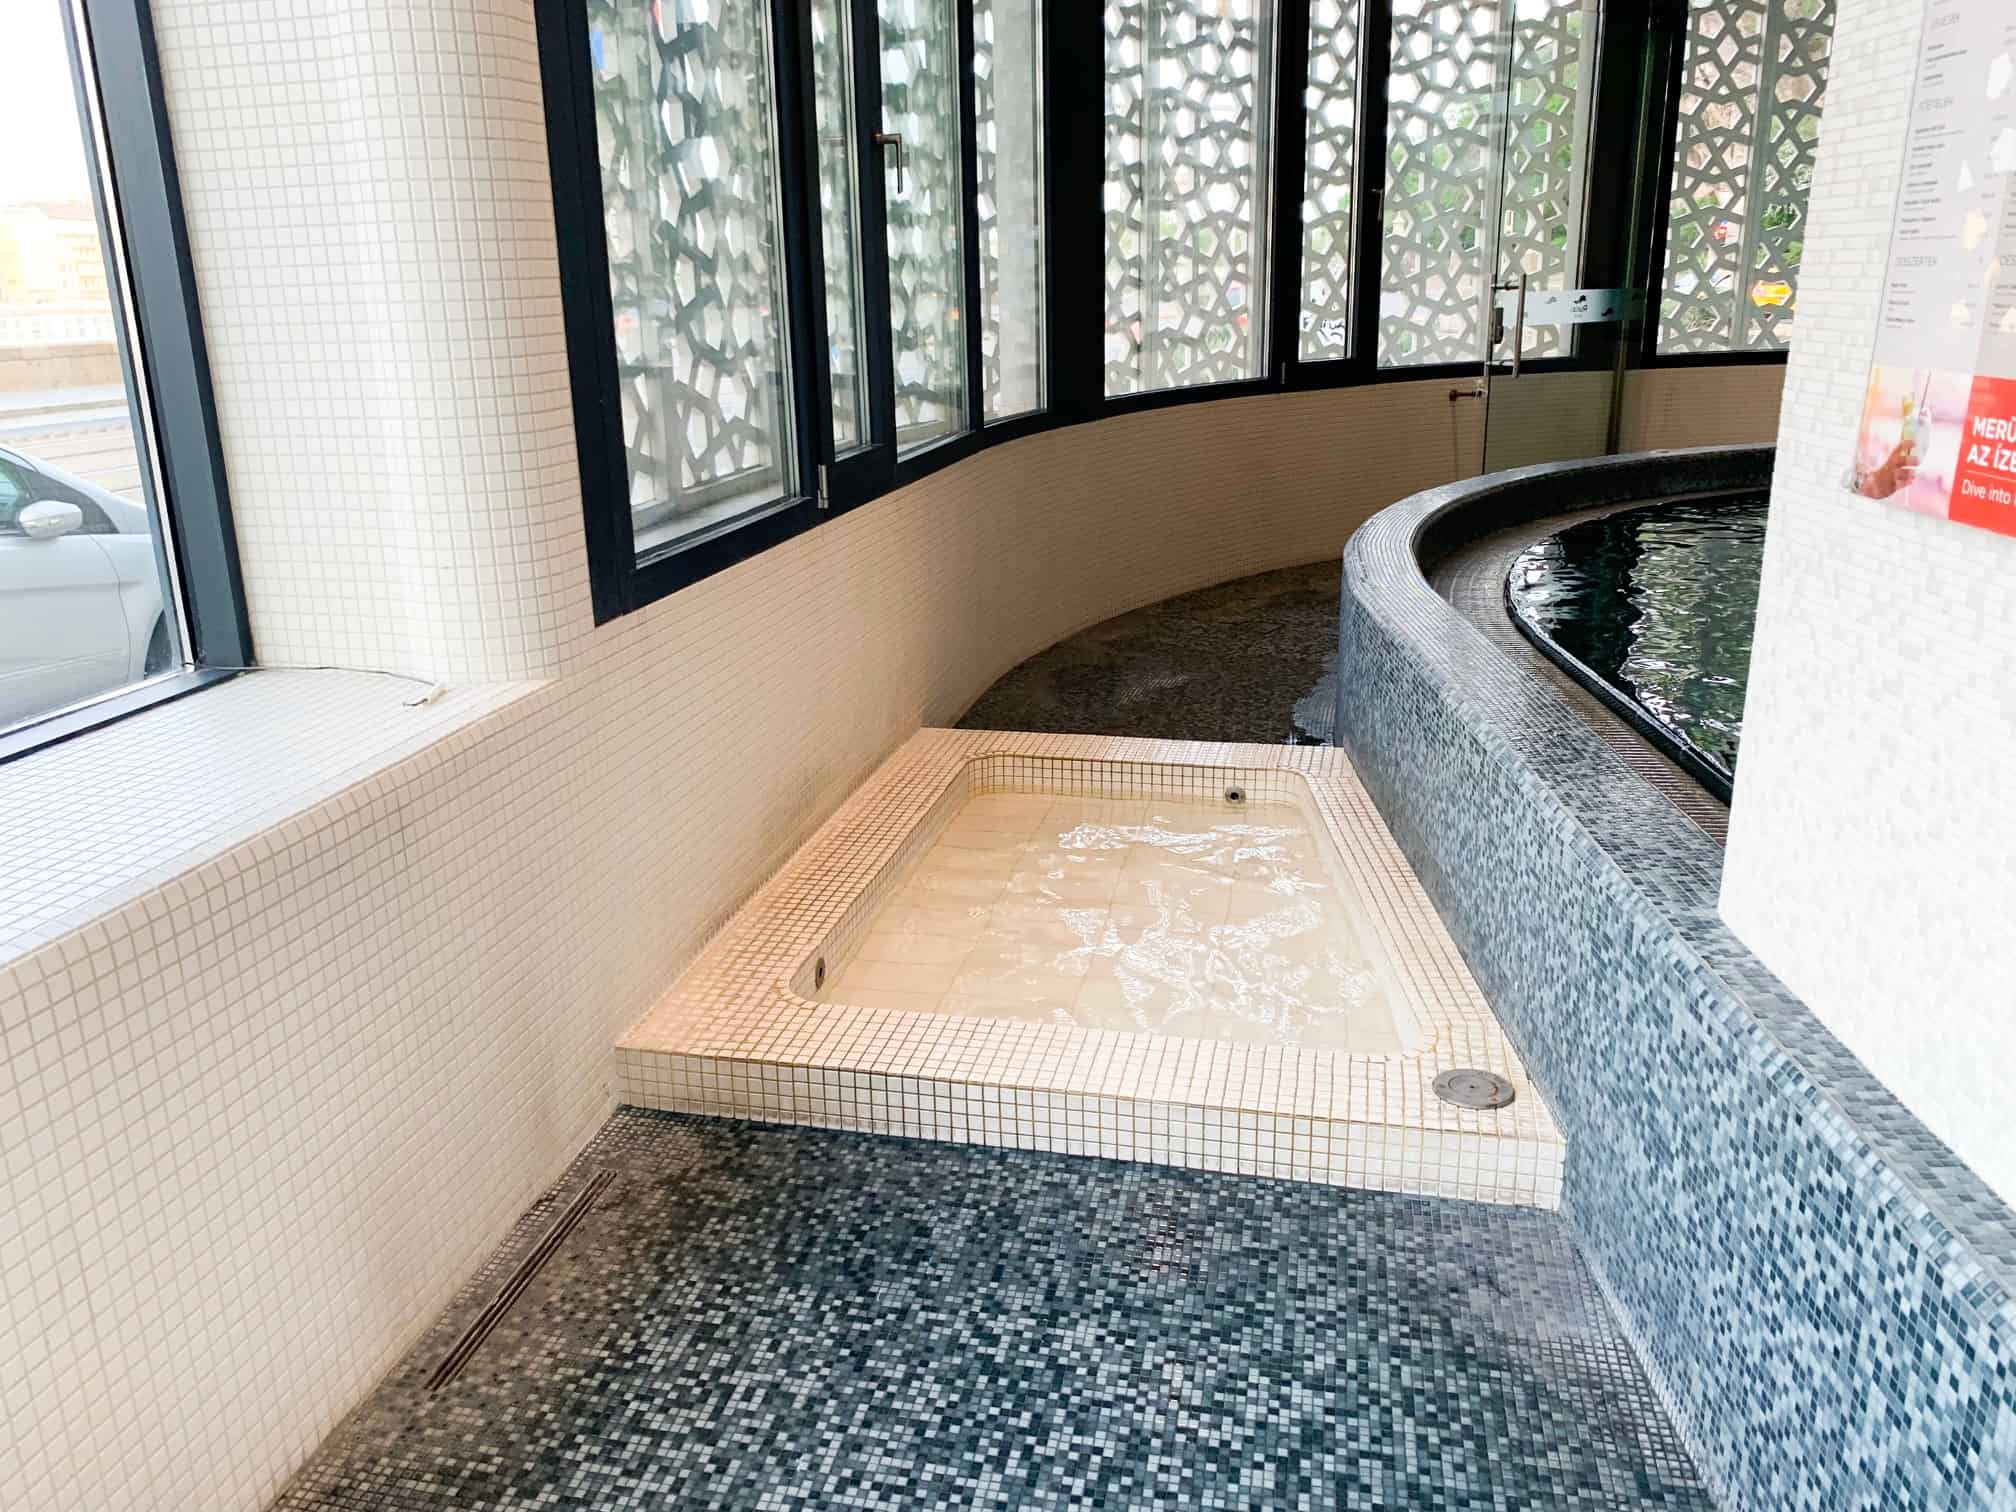 Example of a foot bath at Rudas Baths Budapest